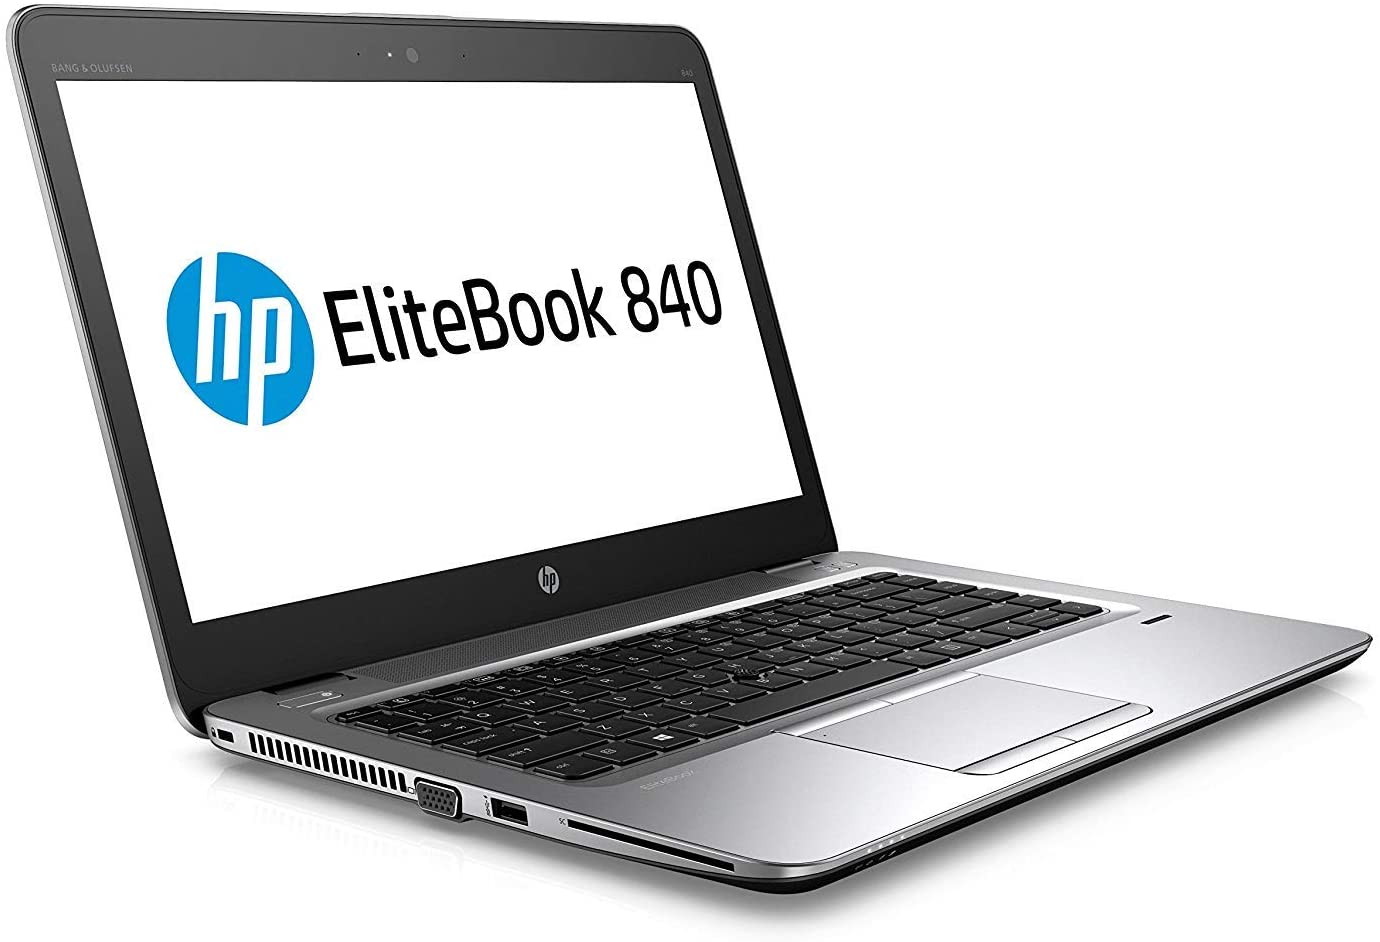 HP Elite book 840 G4 TOUCH SCREEN 14" Laptop, Intel Core i5-7300U, 8 GB DDR4, 256 SSD, Win10Pro Refurb.